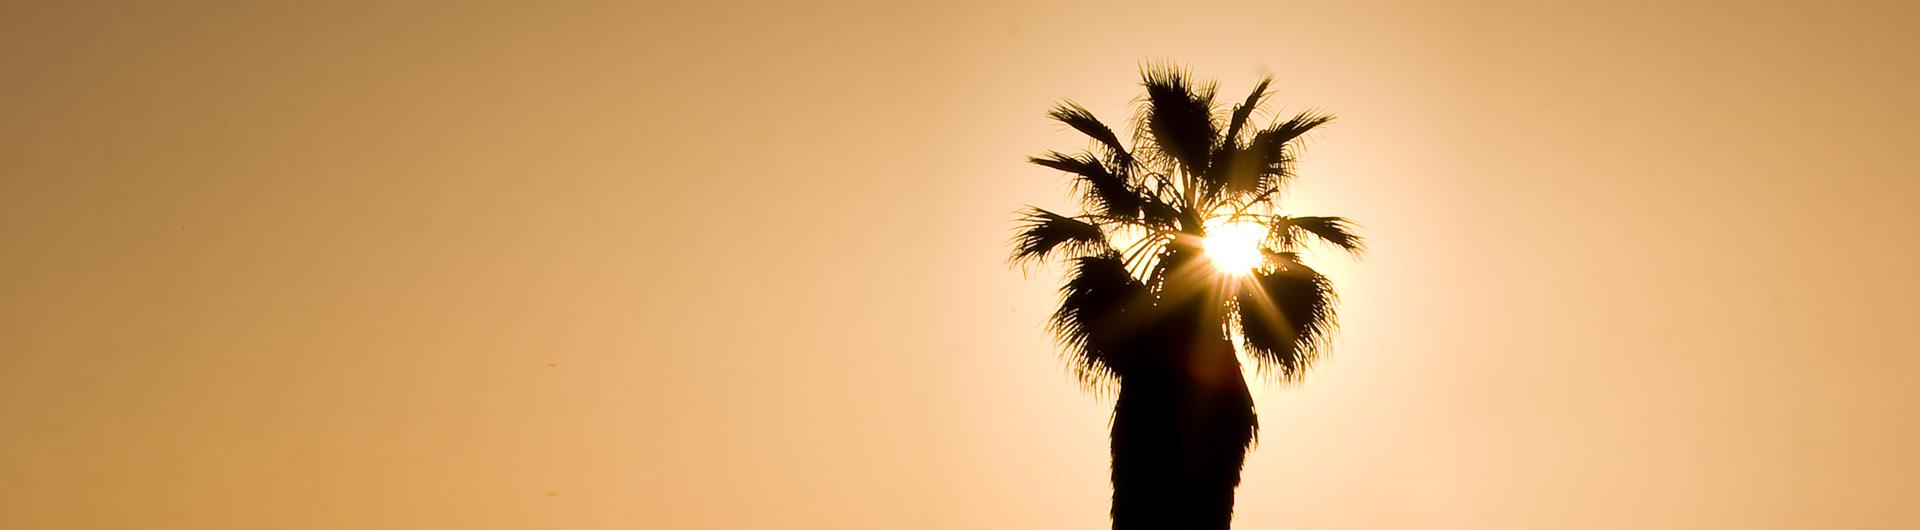 Palm Tree at sunset 